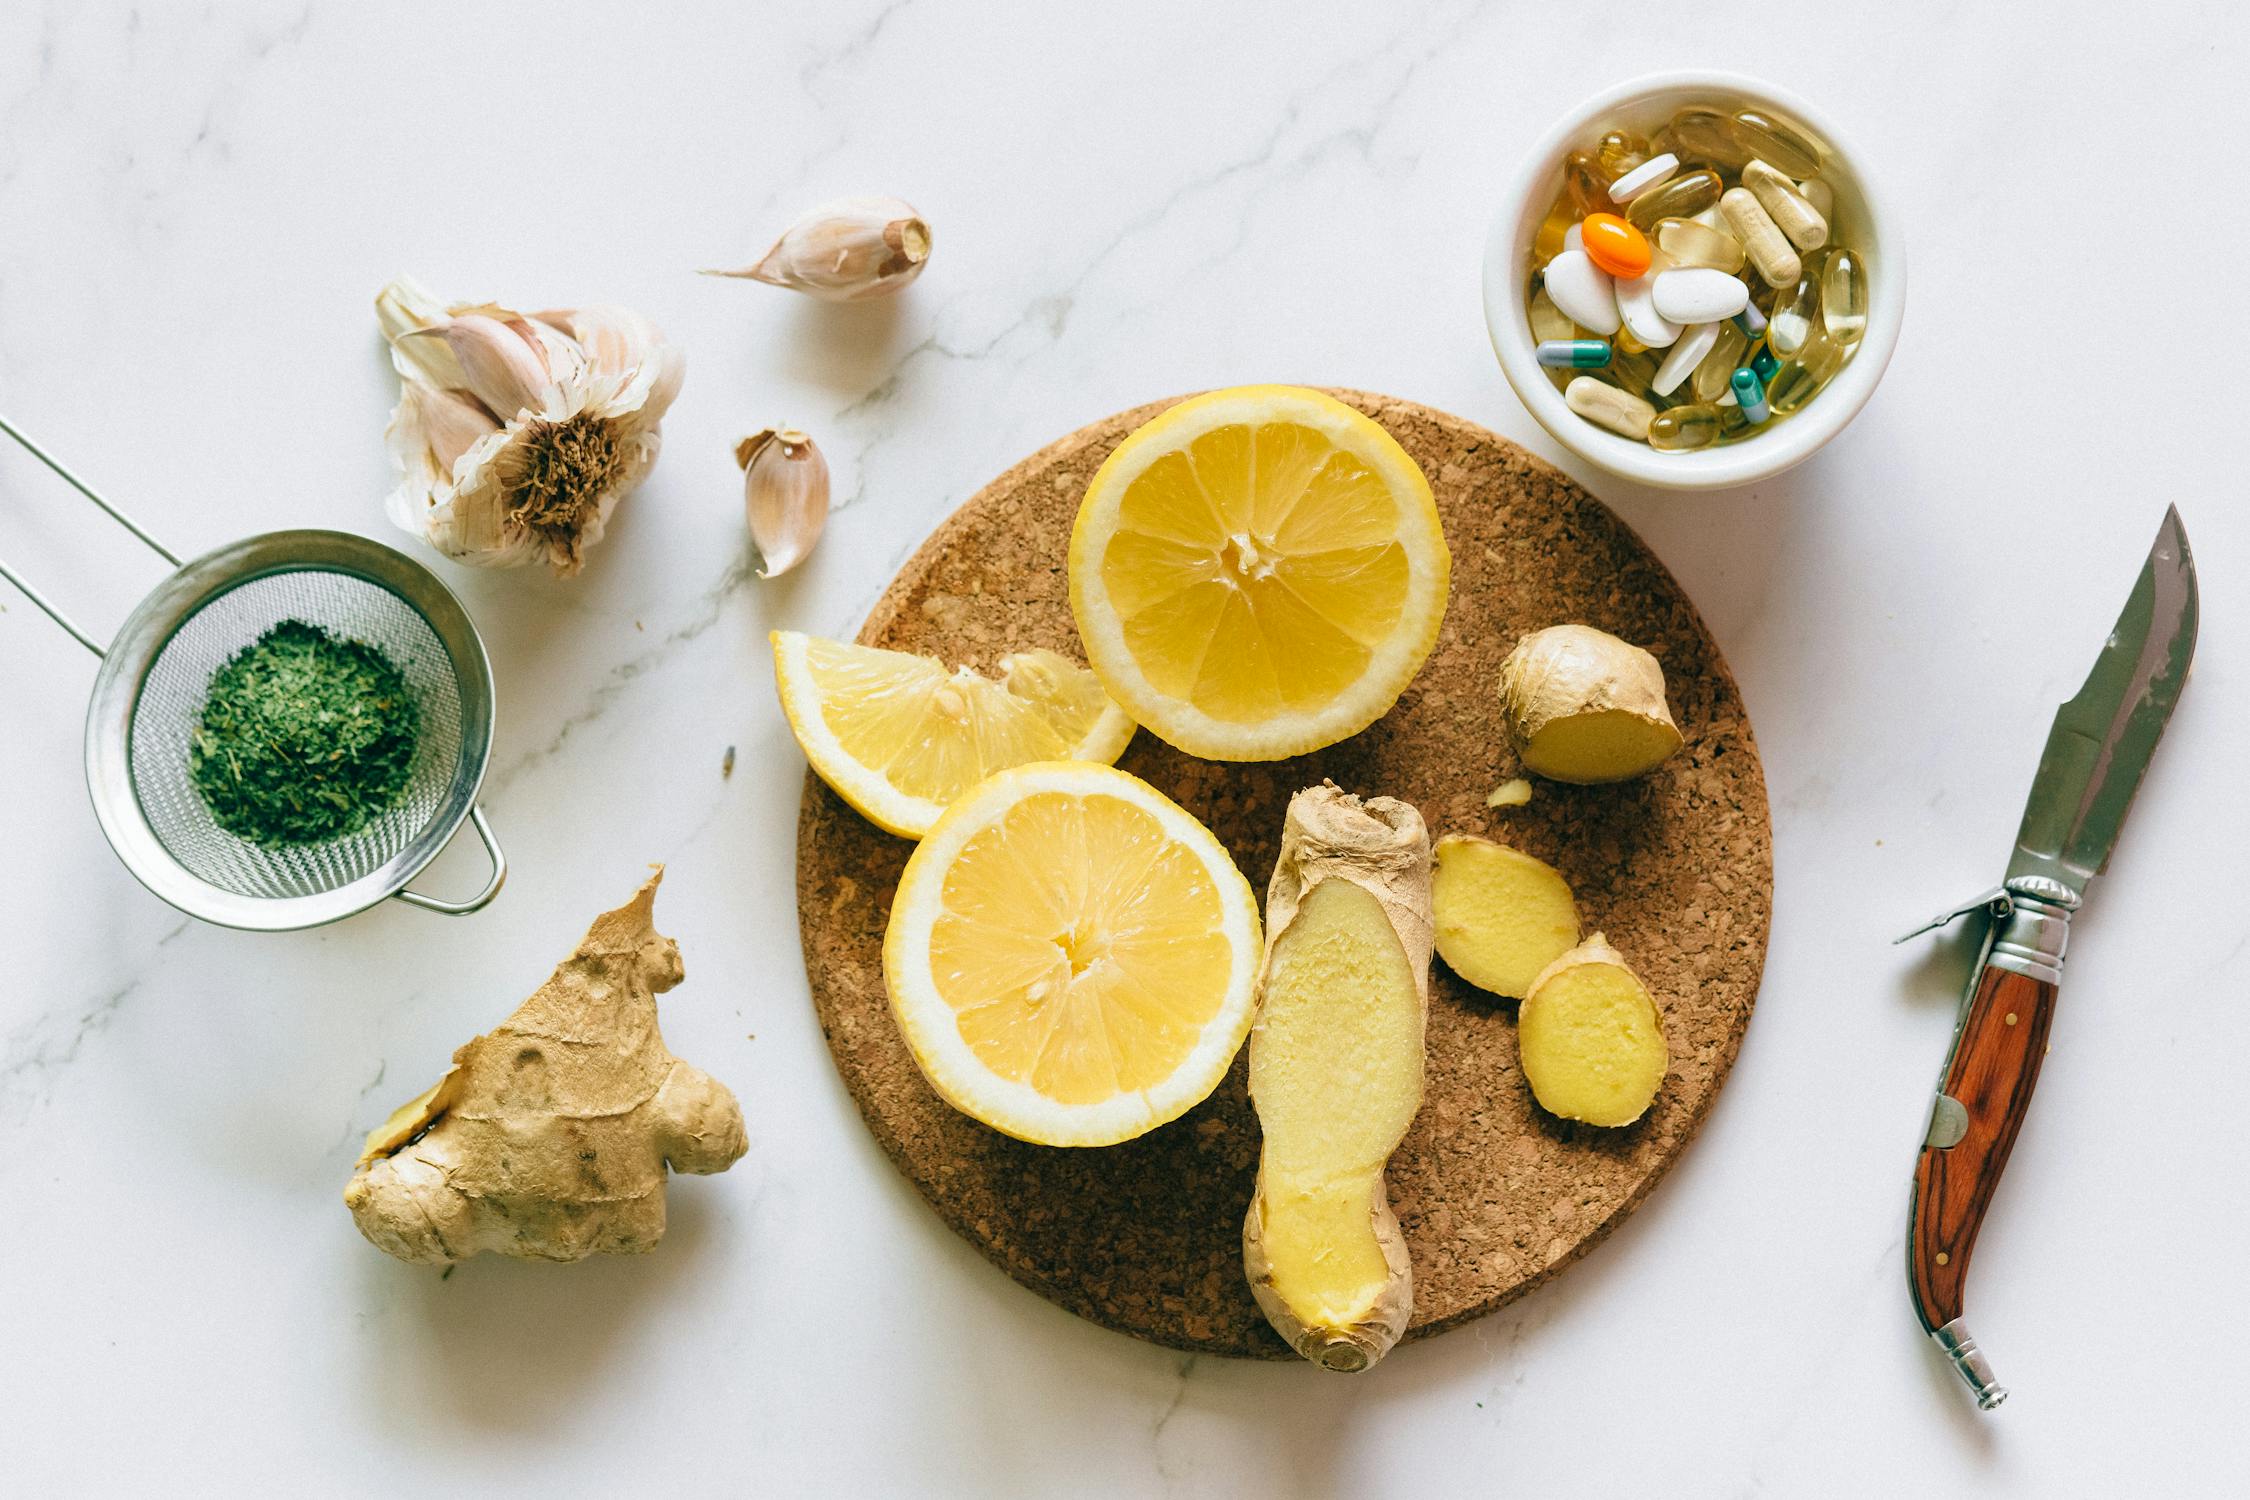 Ginger & Lemon Tea Photo by Nataliya Vaitkevich from Pexels